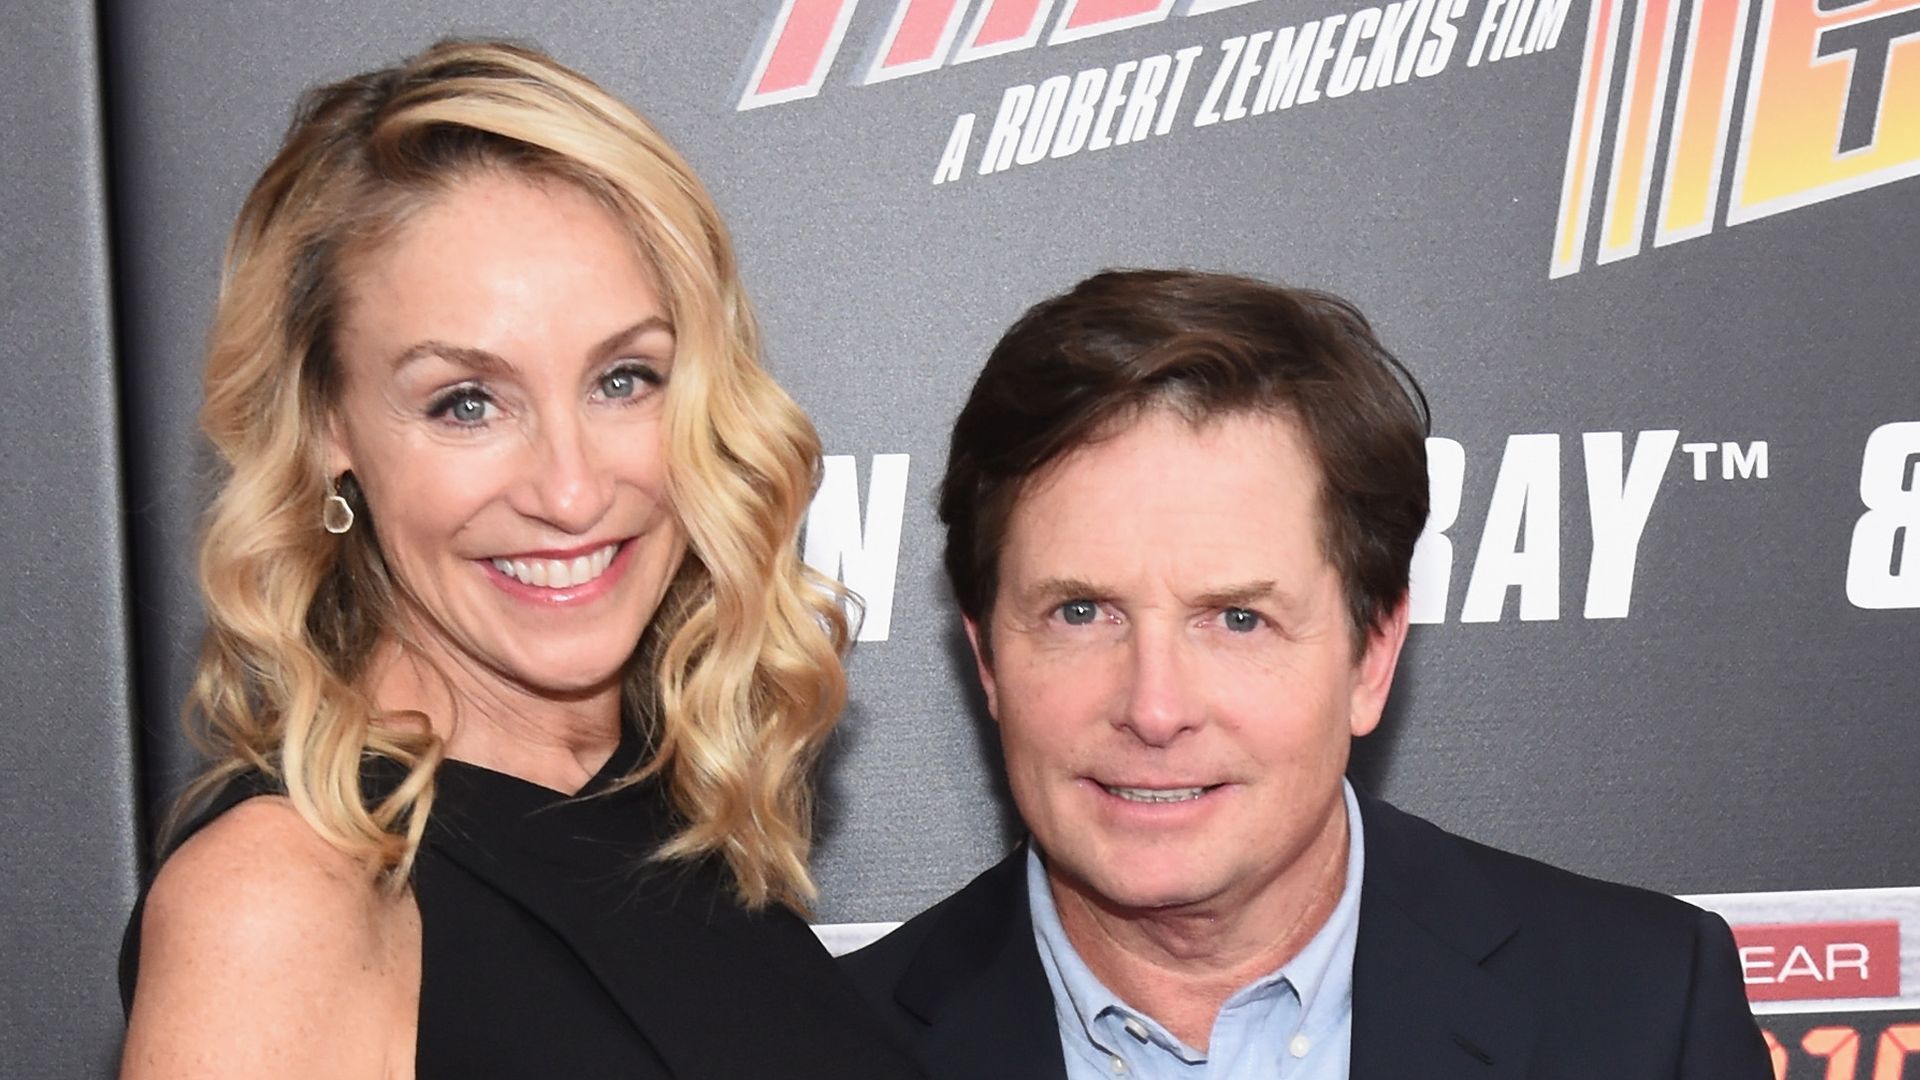 Michael J. Fox celebrates lookalike son Sam's birthday with rare photo and tribute